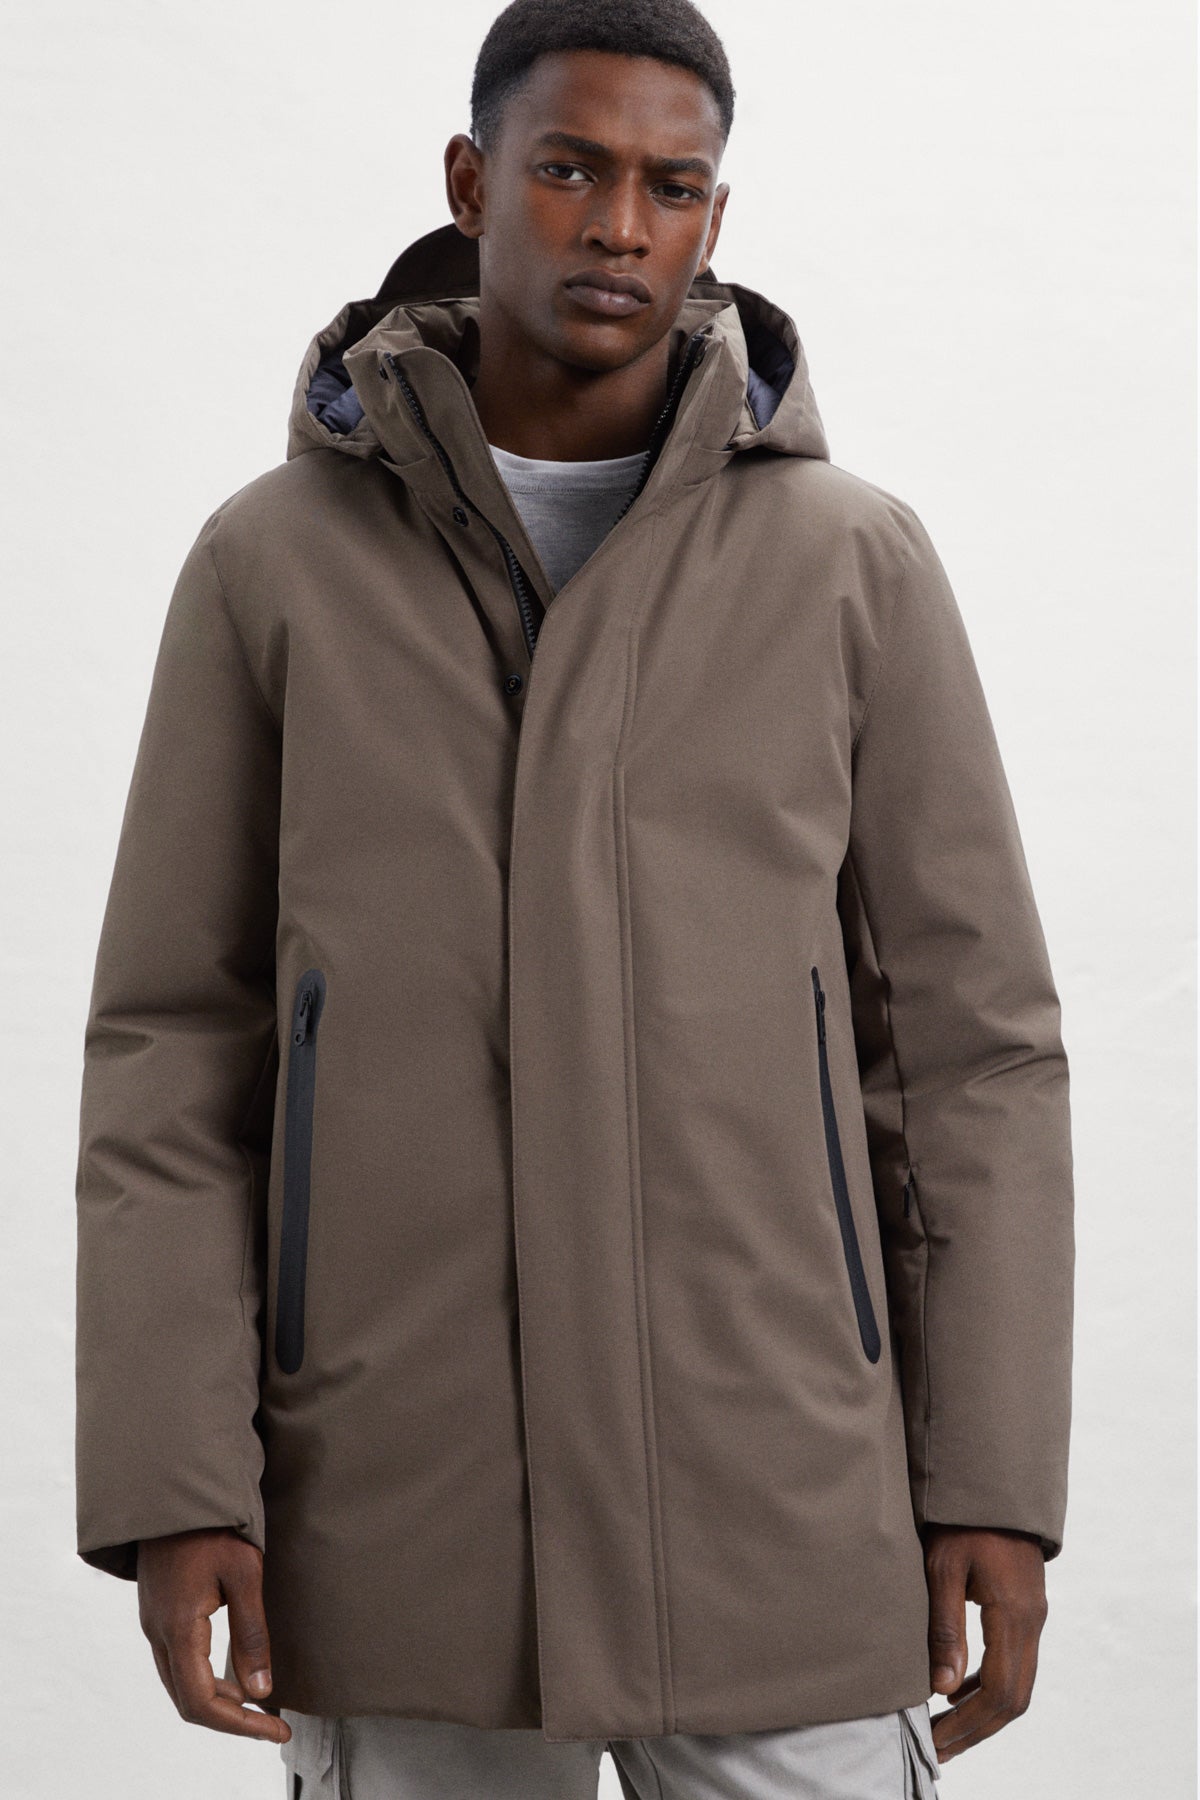 Parko waterproof coat with a hood for the rain | ECOALF